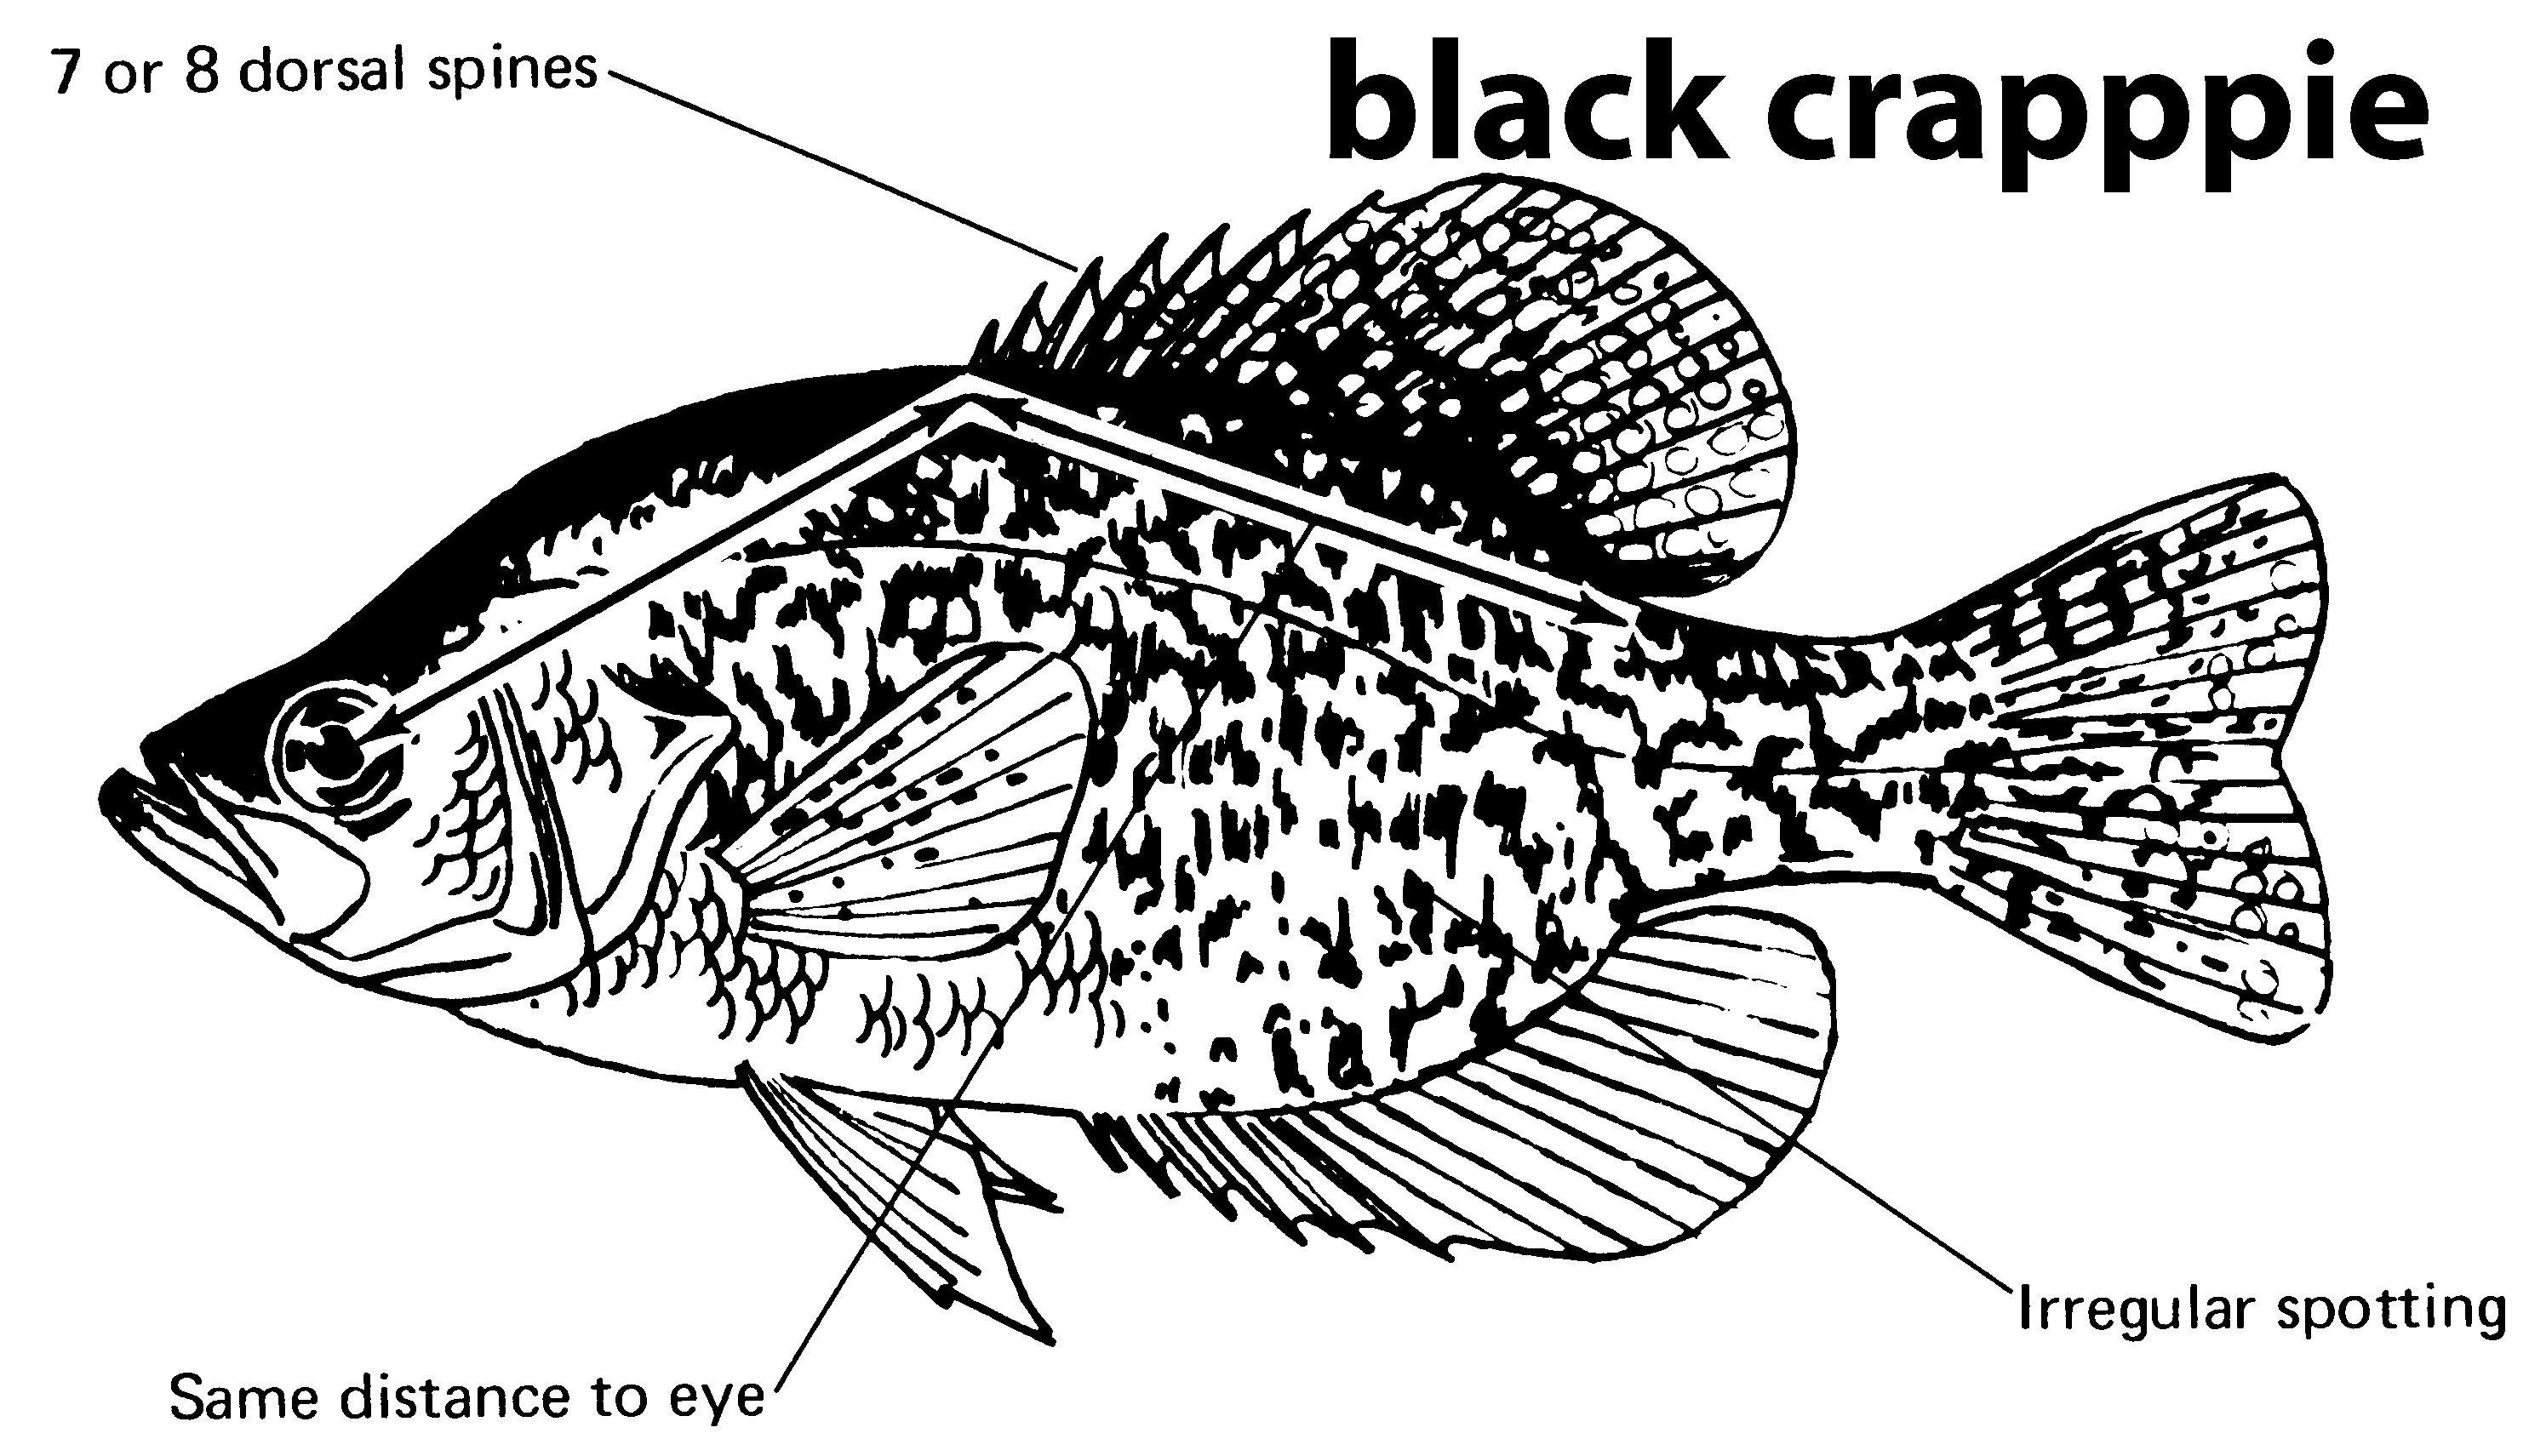 characteristics of a black crappie